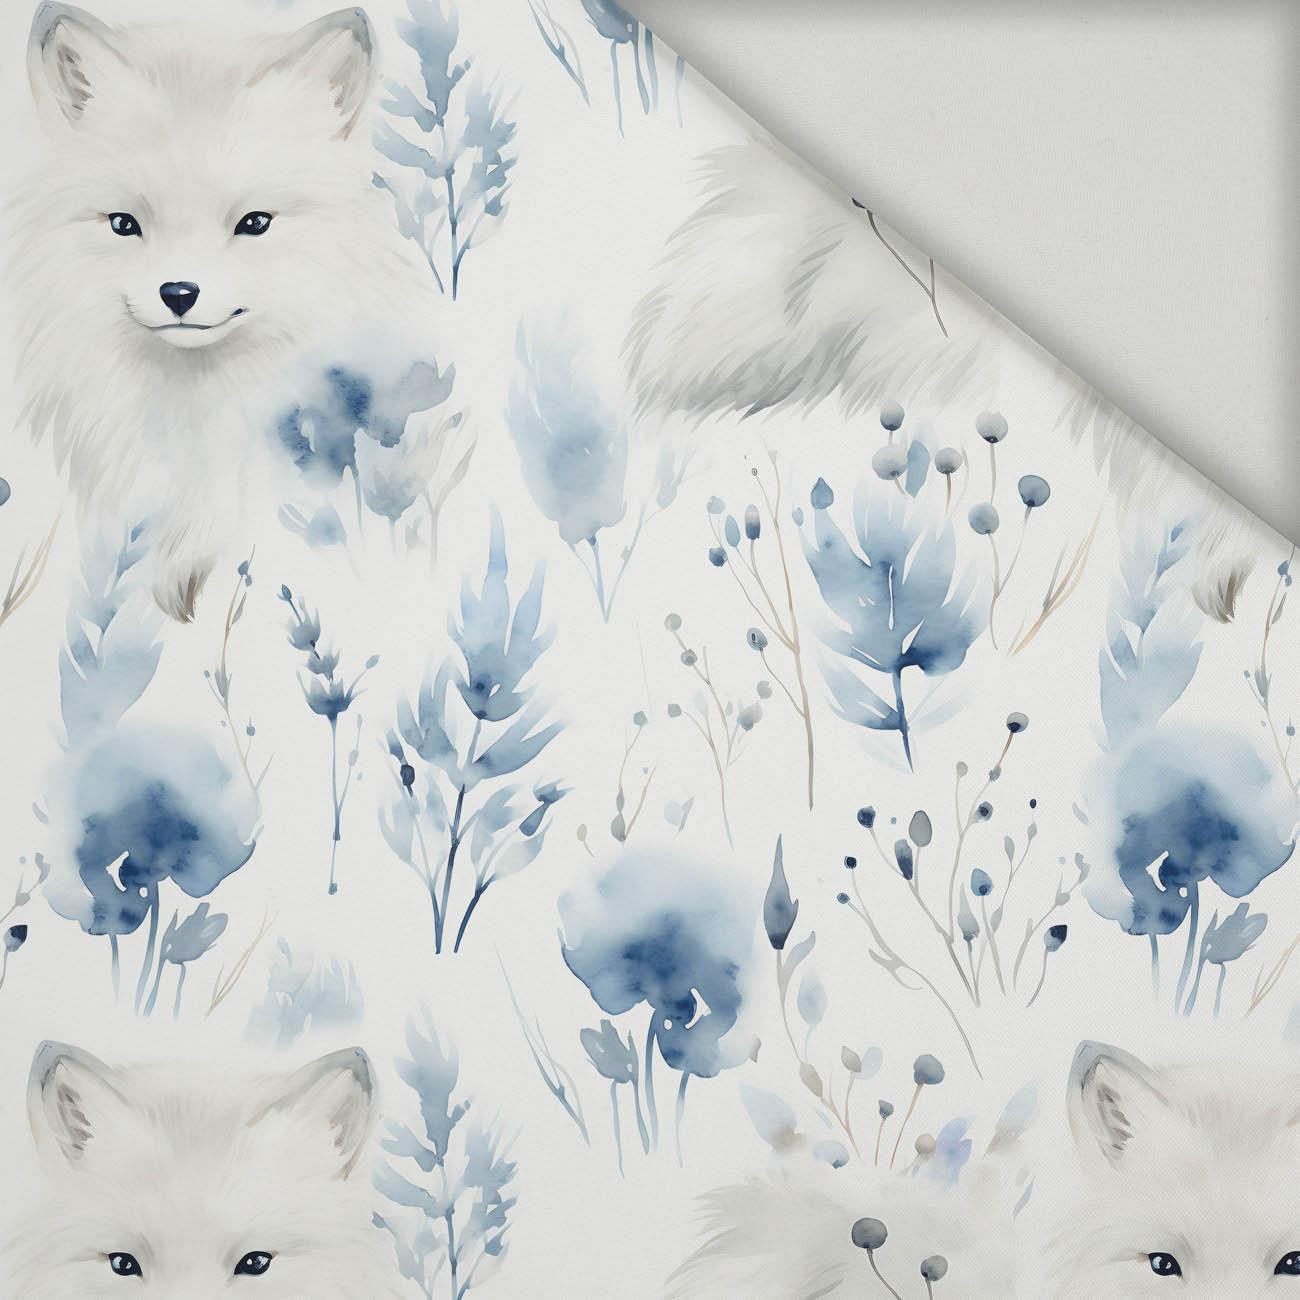 ARCTIC FOX - quick-drying woven fabric